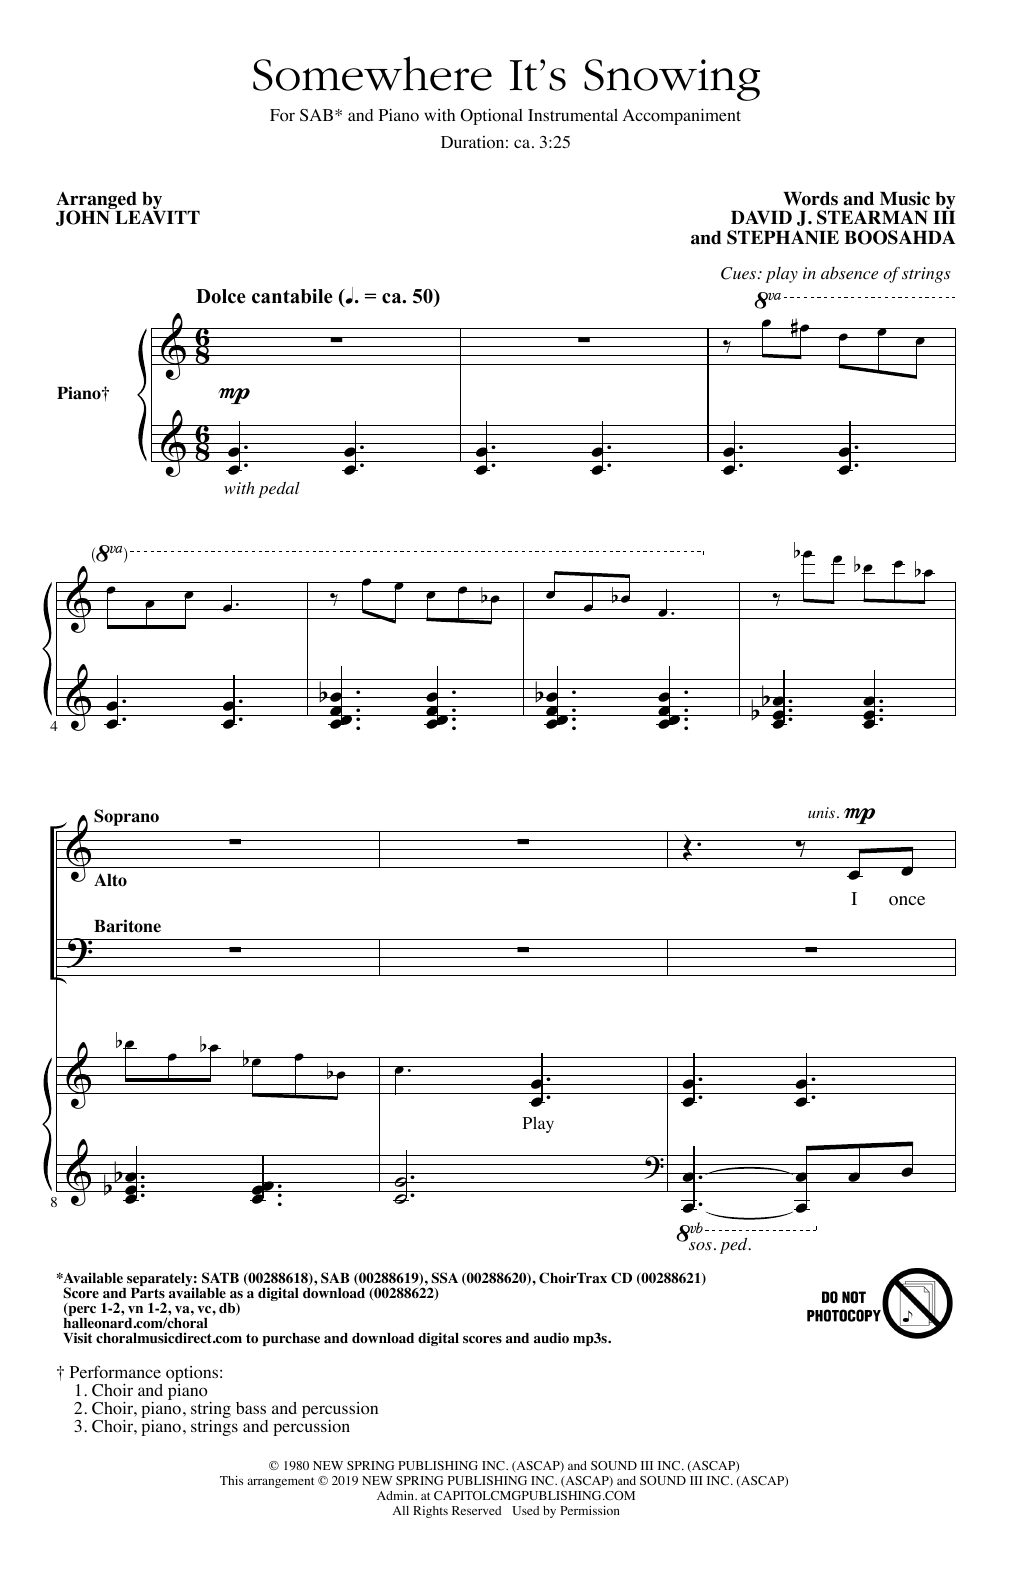 David J. Stearman III & Stephanie Boosahda Somewhere It's Snowing (arr. John Leavitt) Sheet Music Notes & Chords for SAB Choir - Download or Print PDF